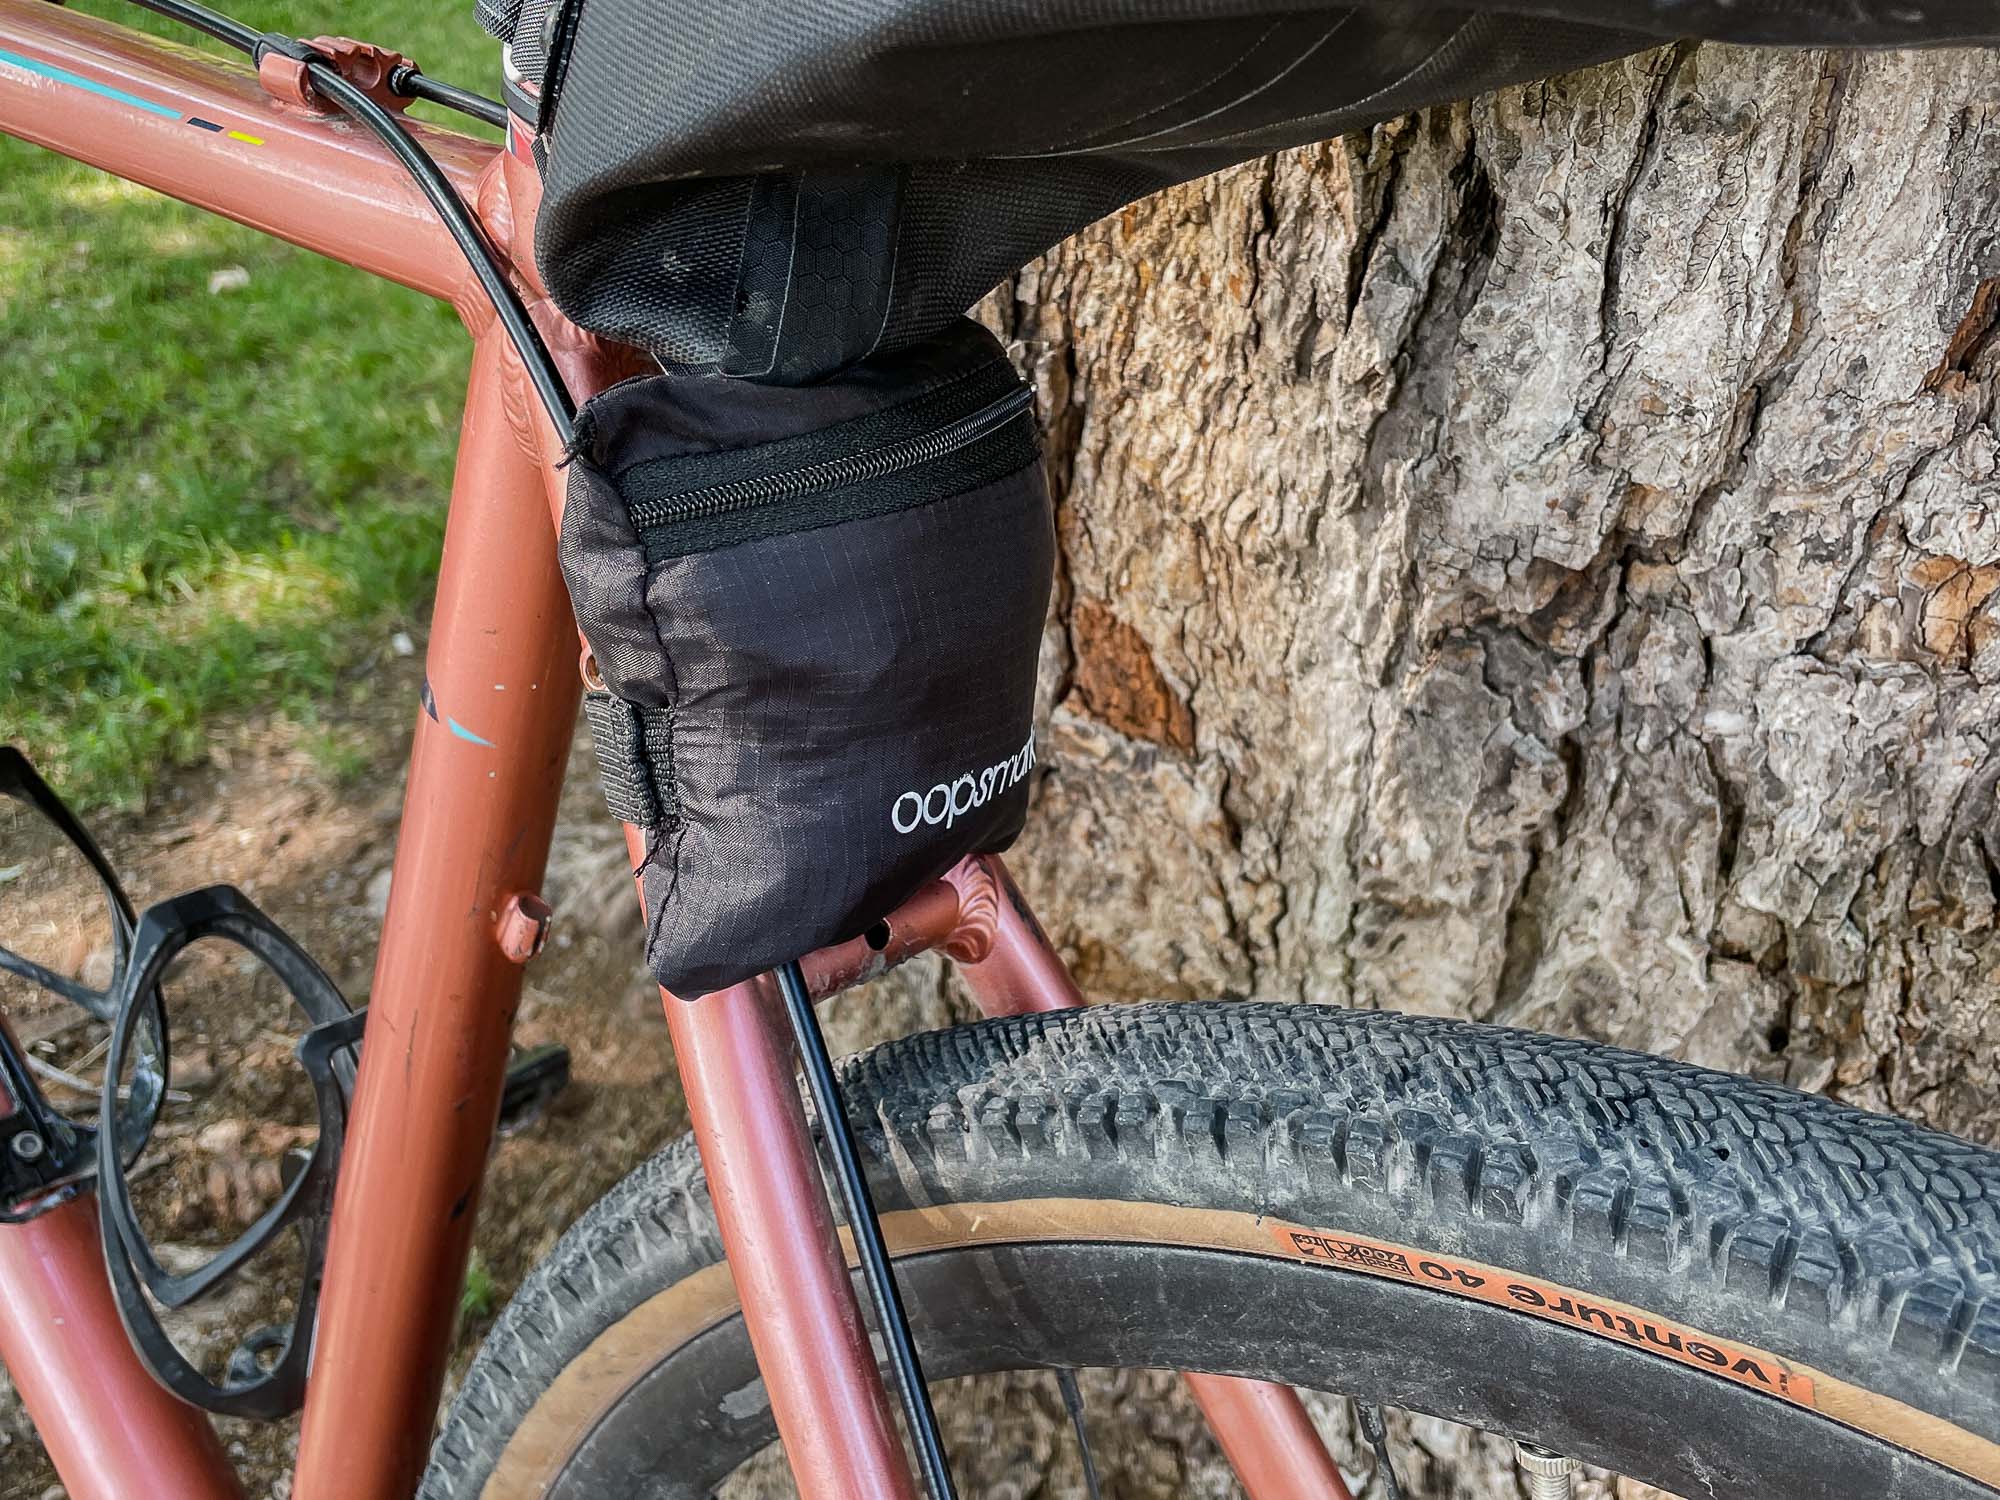 Bicycle GoBaGG - The bike purse - Oopsmark